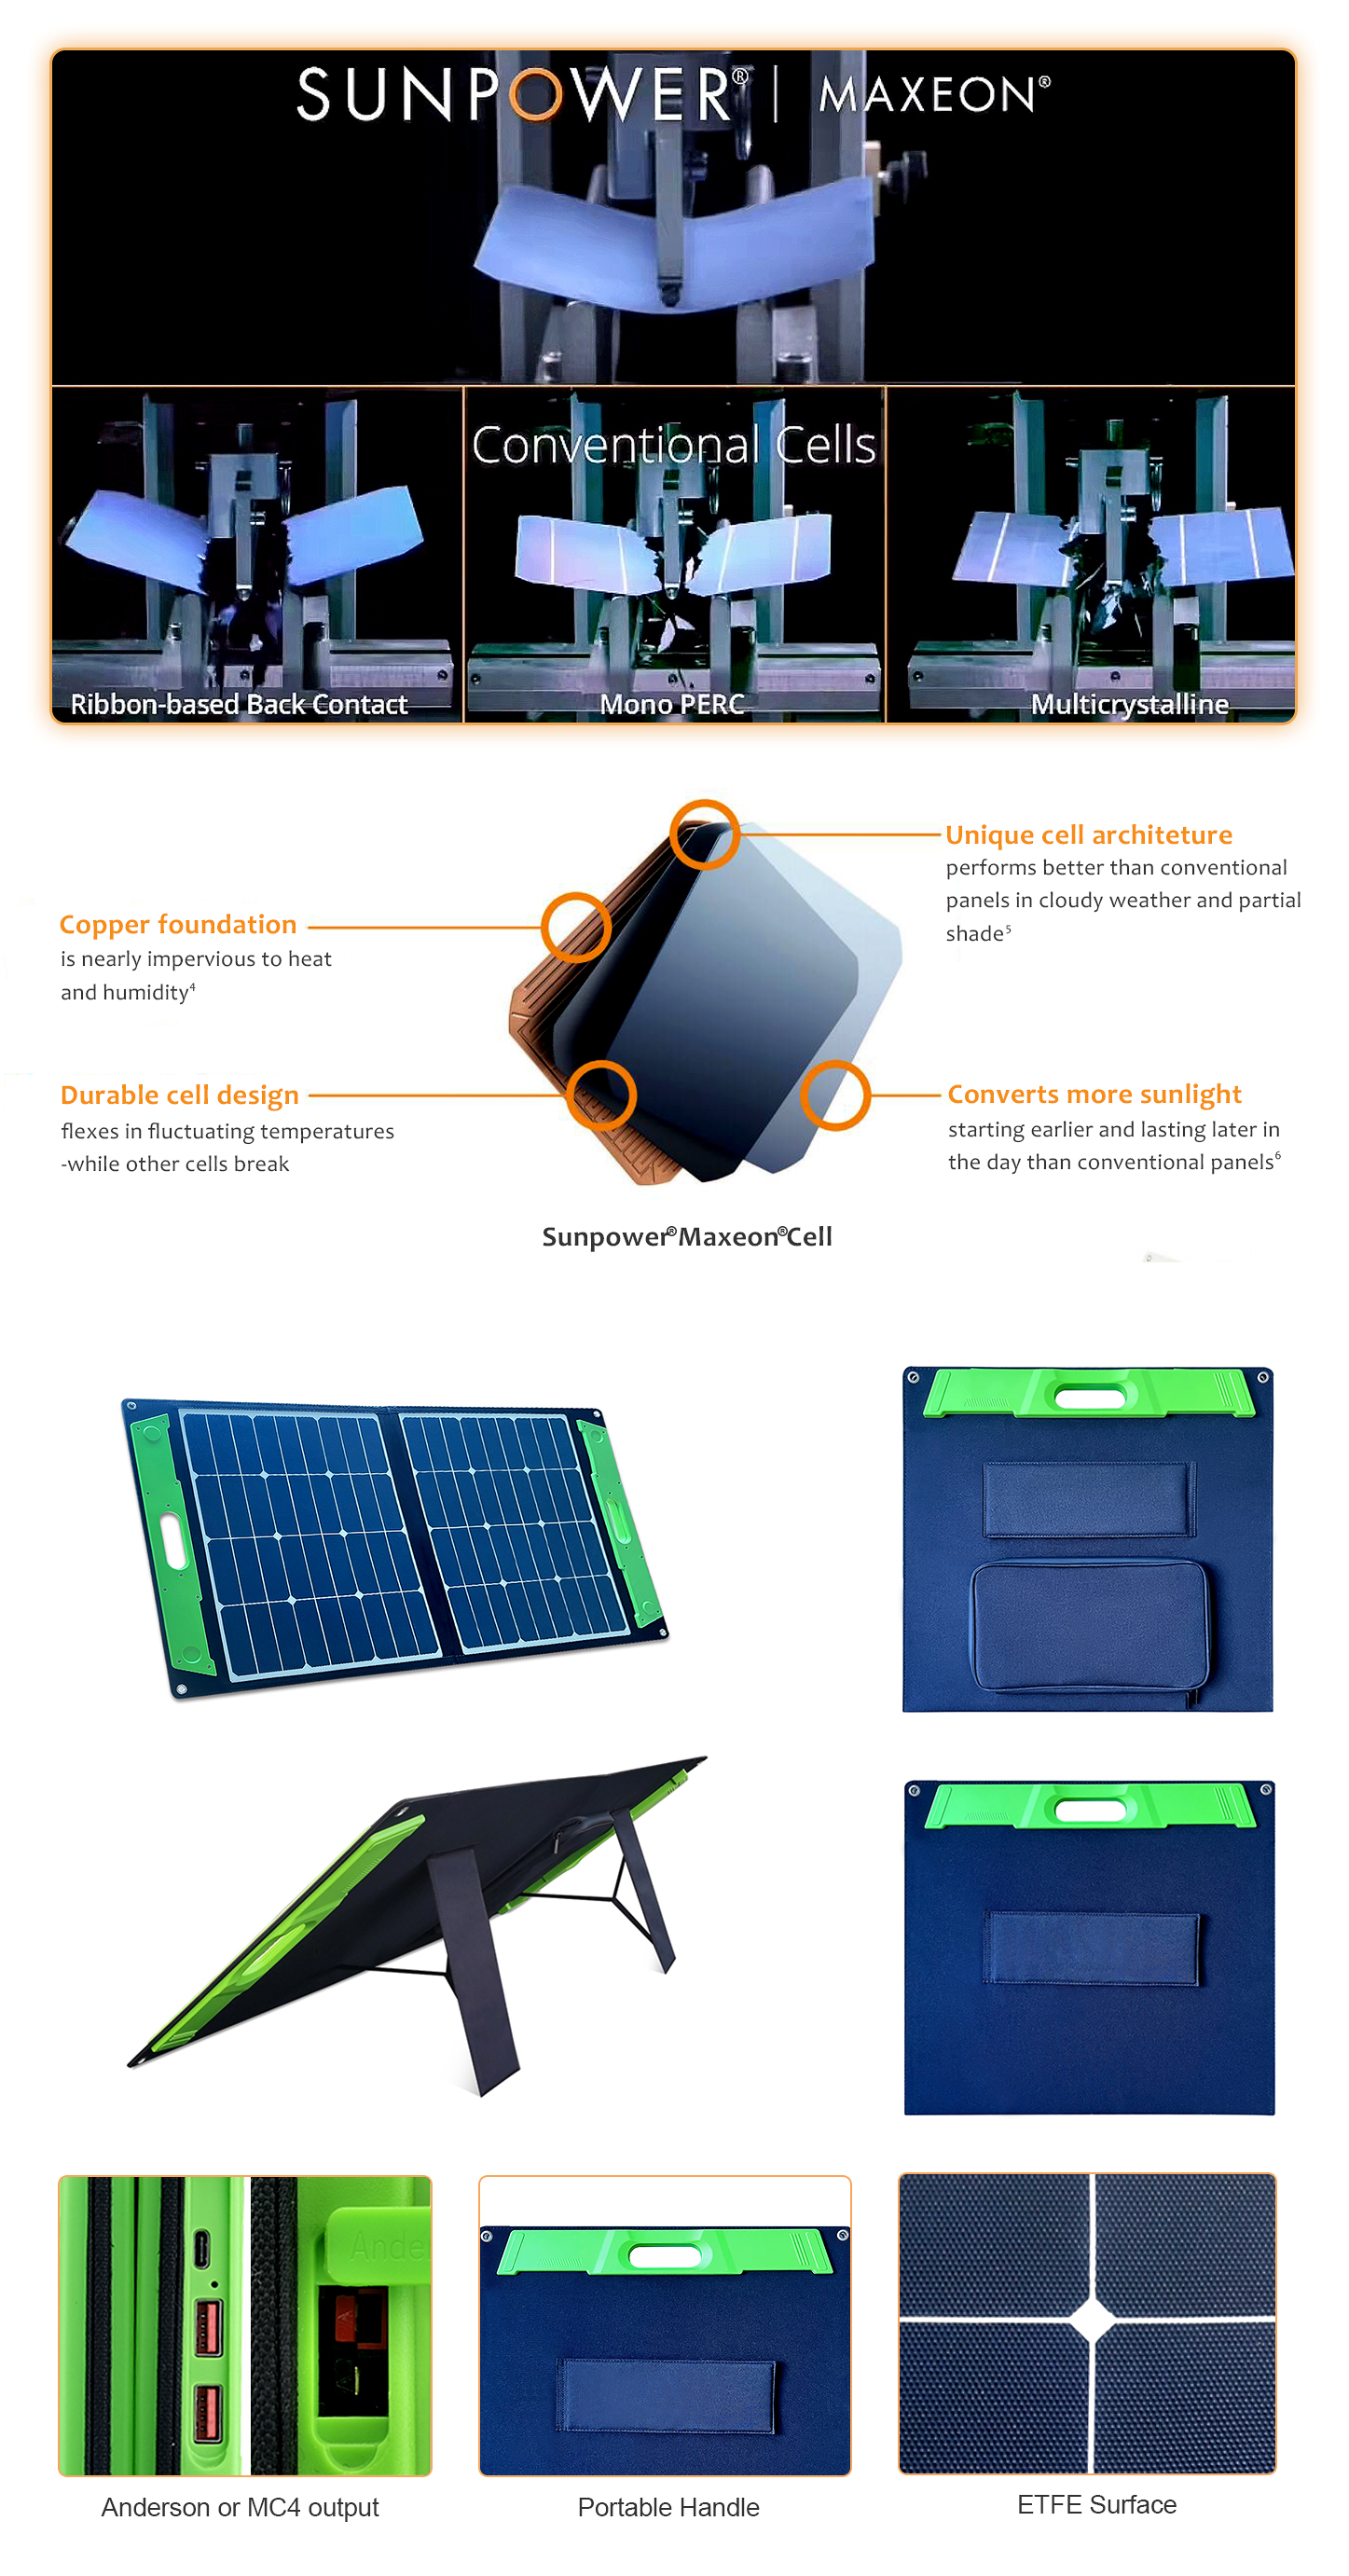 EYONGPV-80W ETFE Foldable Solar Panel